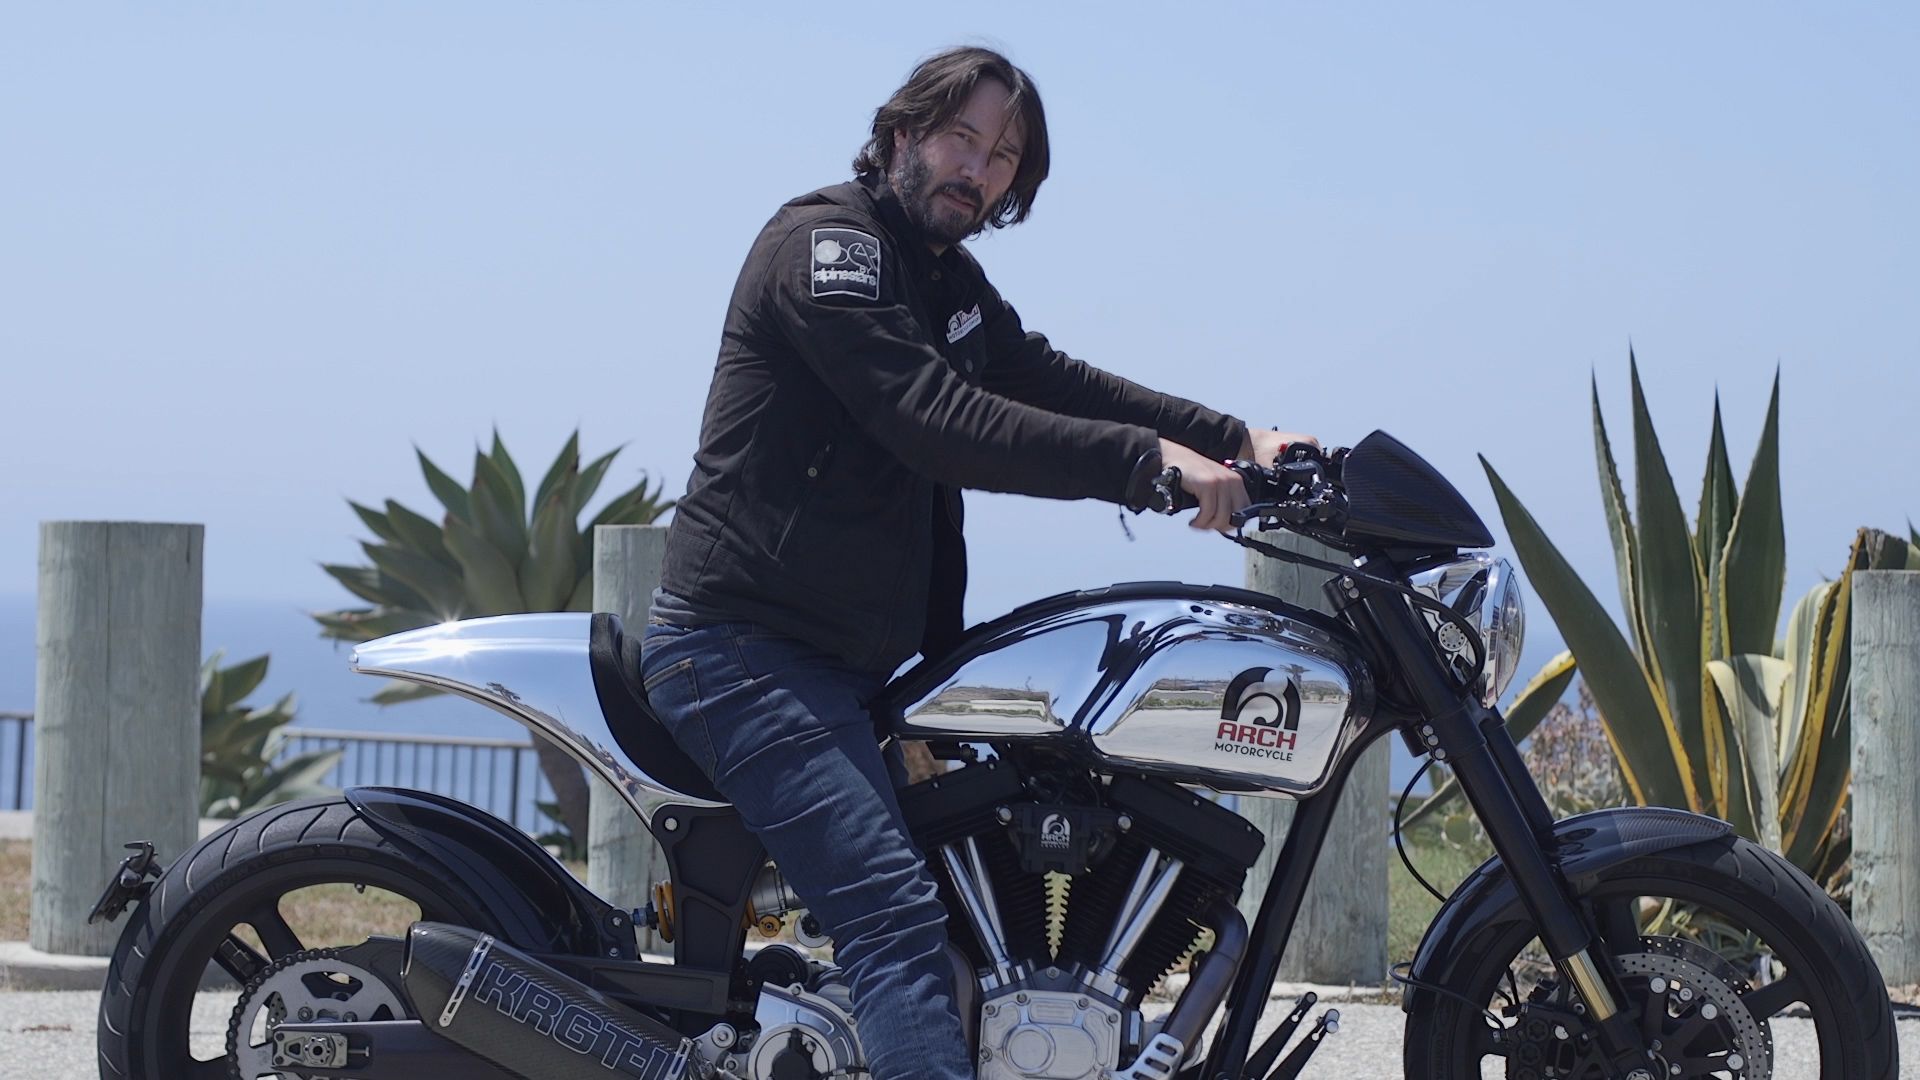 Keanu Reeves on his Arch motorcycle